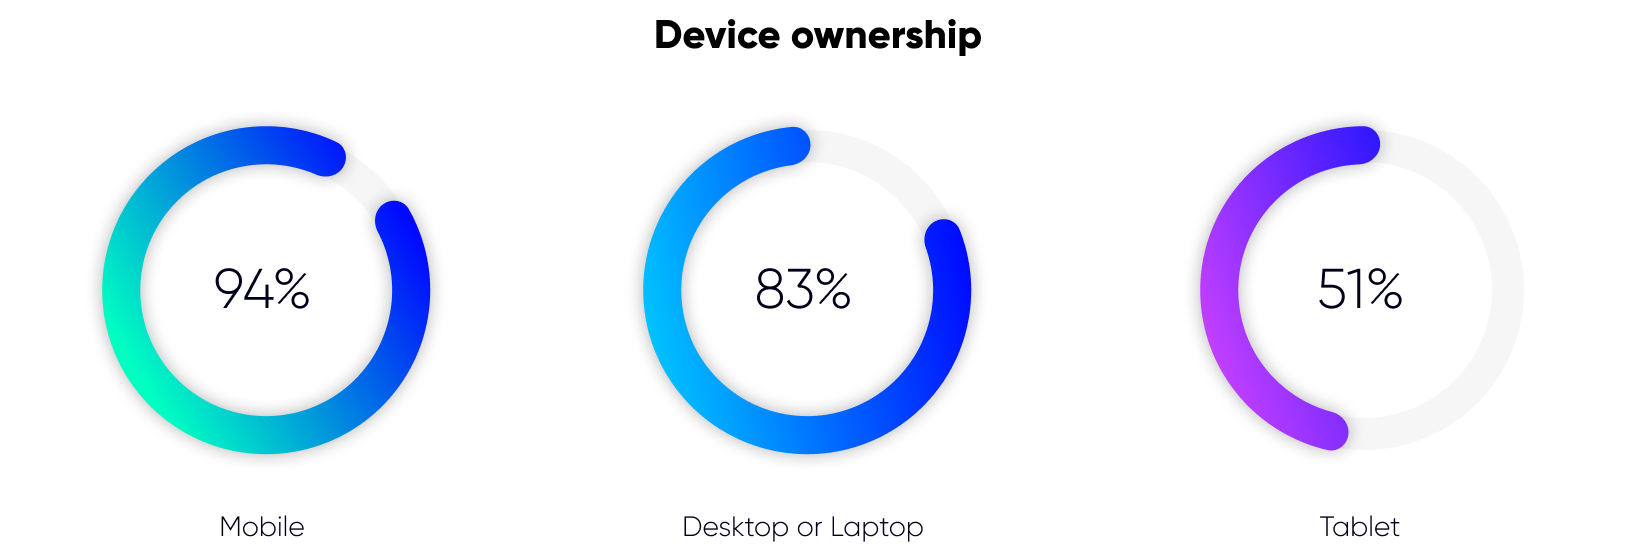 device ownership in australia